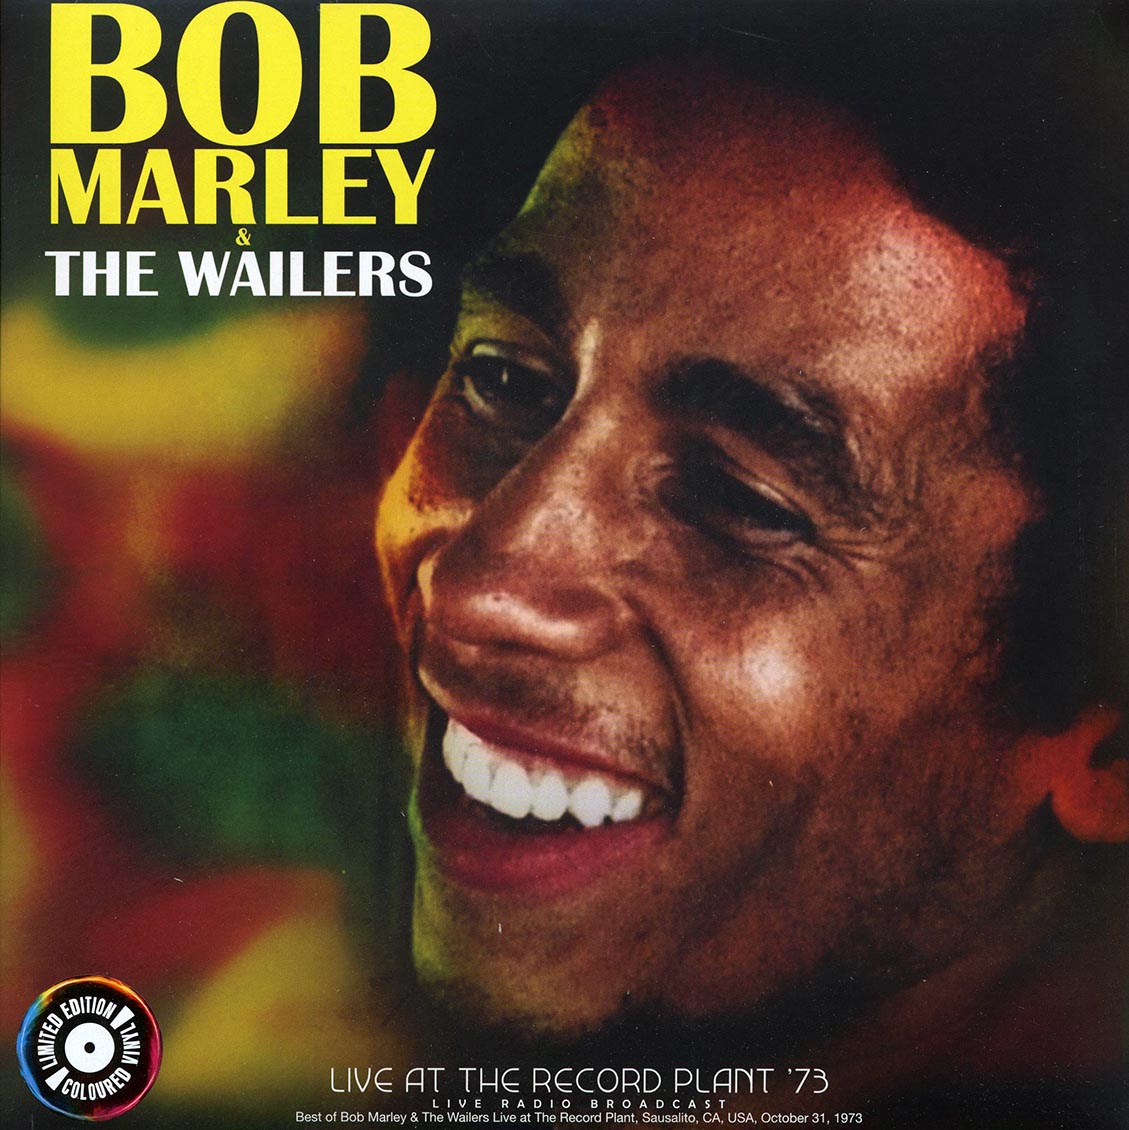 Bob Marley - Live At The Record Plant '73 (ltd. ed.) (colored vinyl) - Vinyl LP